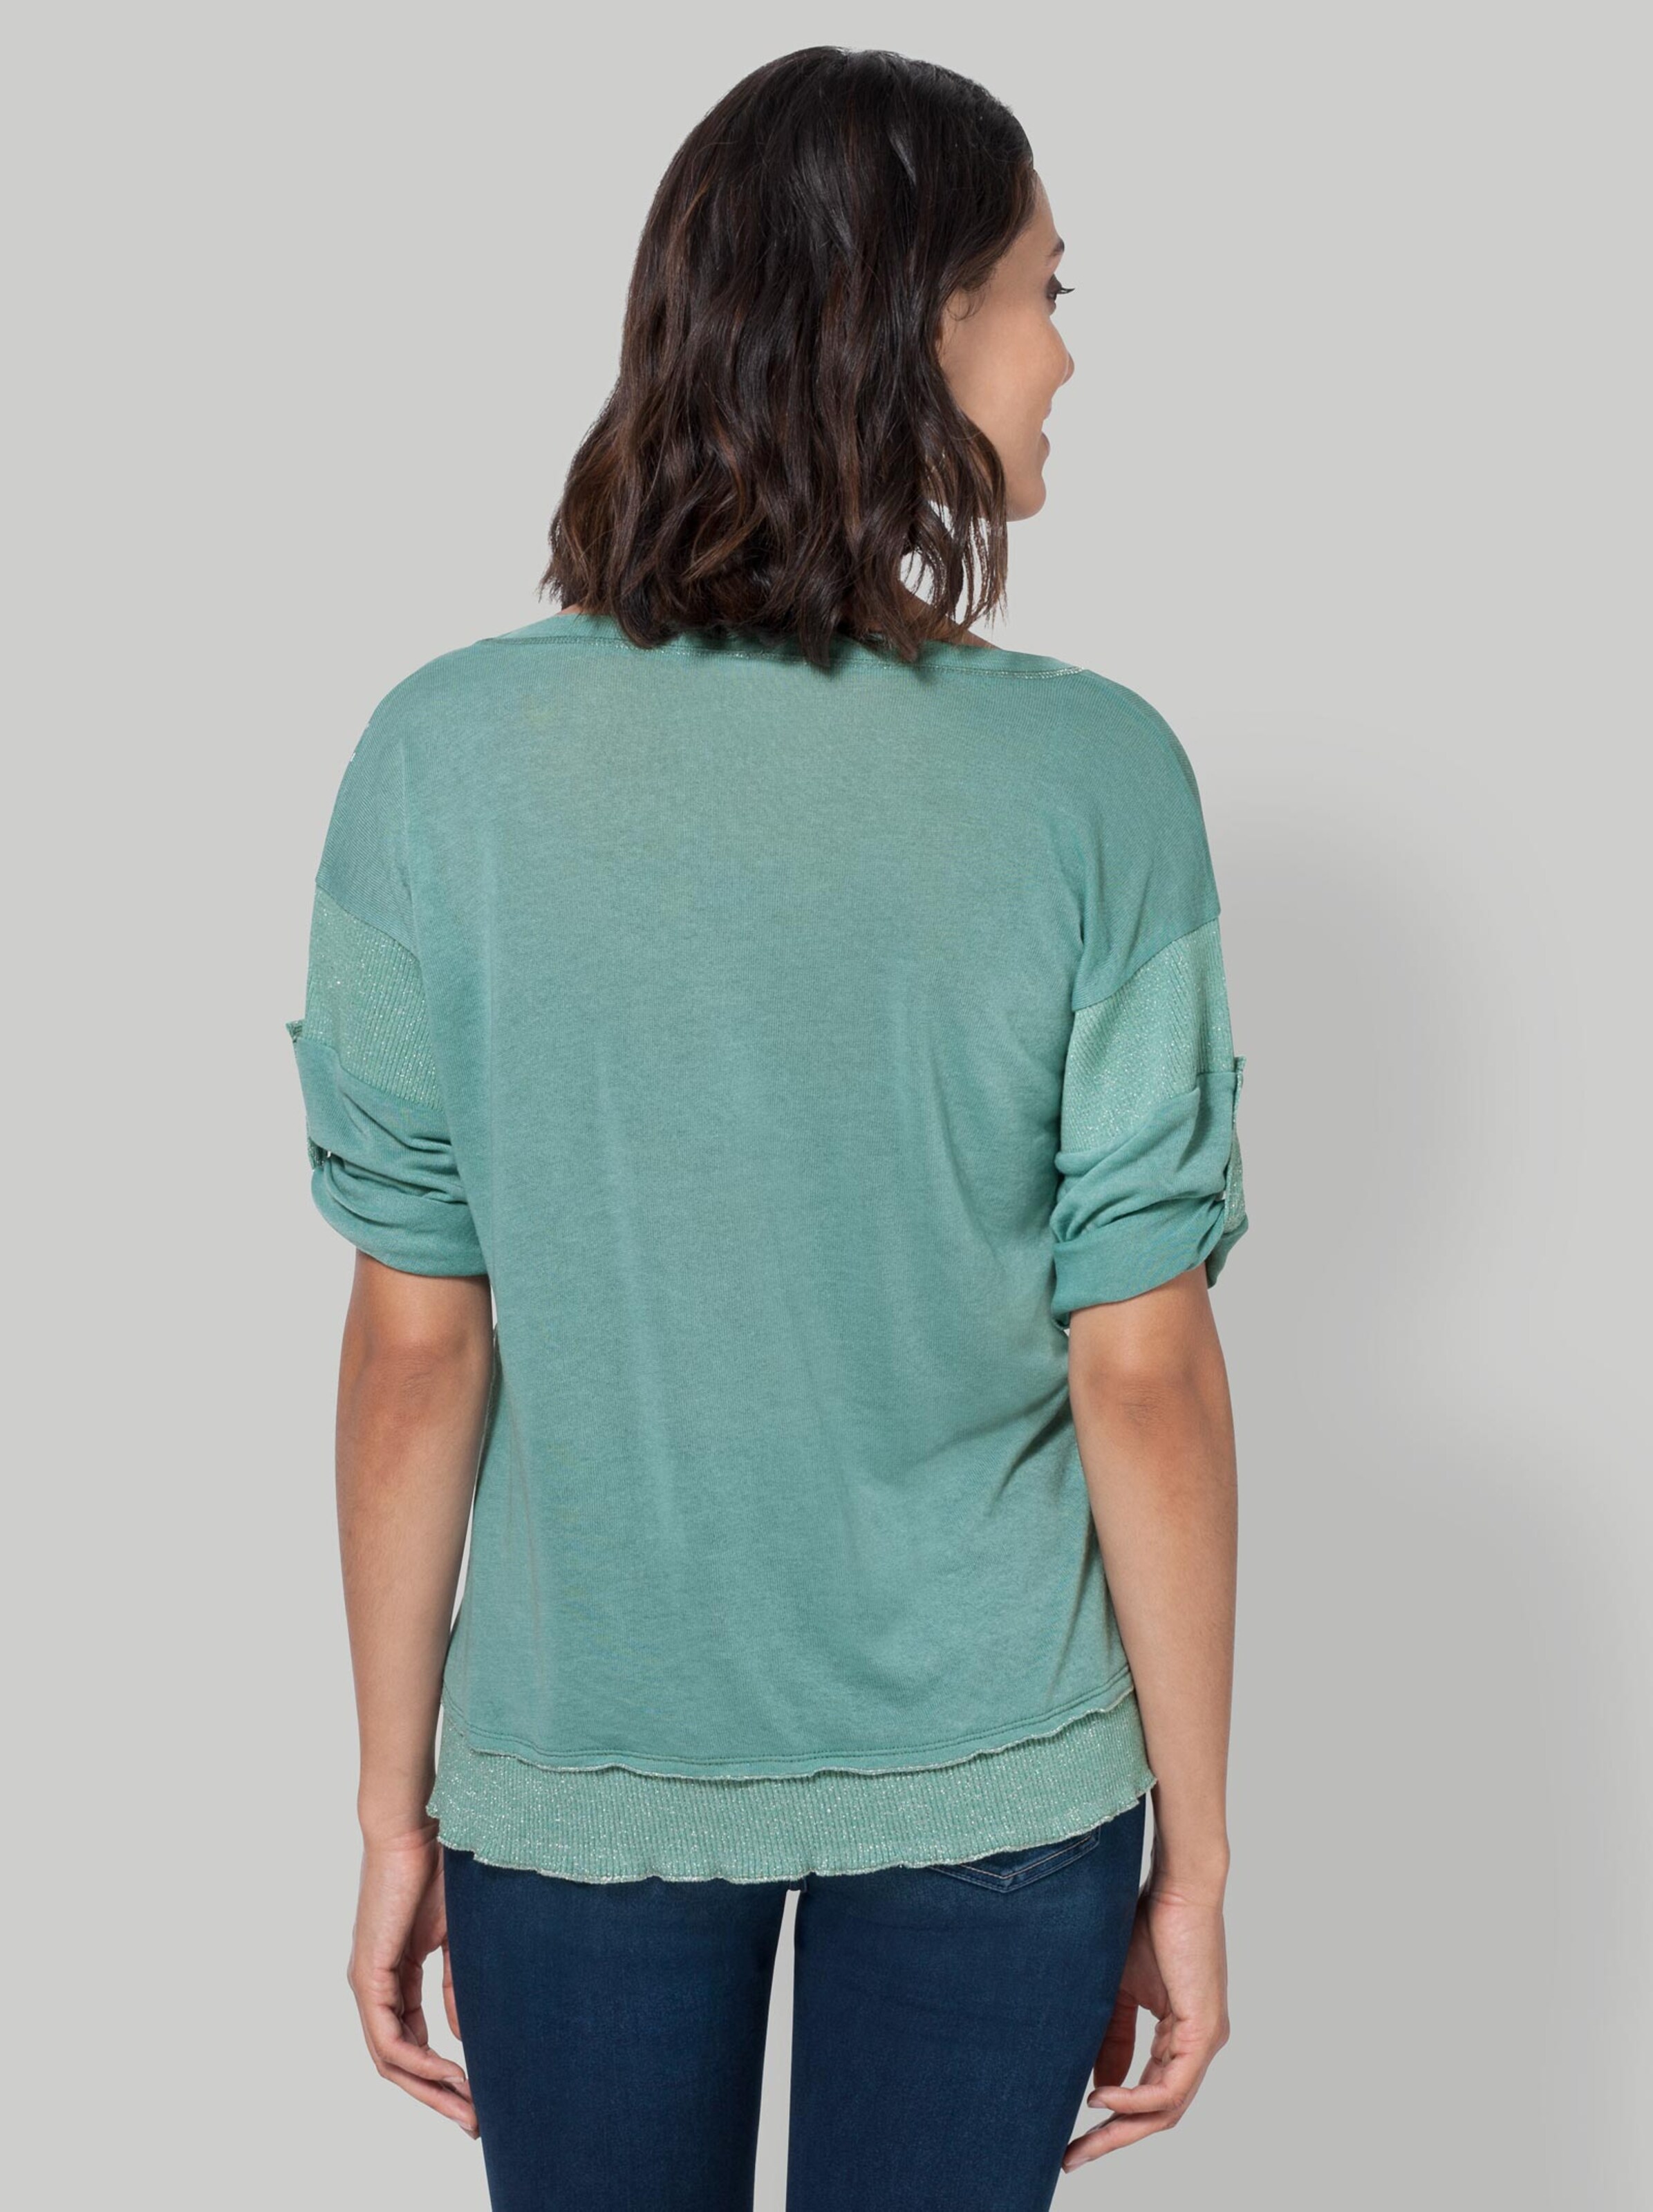 Damenmode Shirts Print-Shirt in jadegrün 